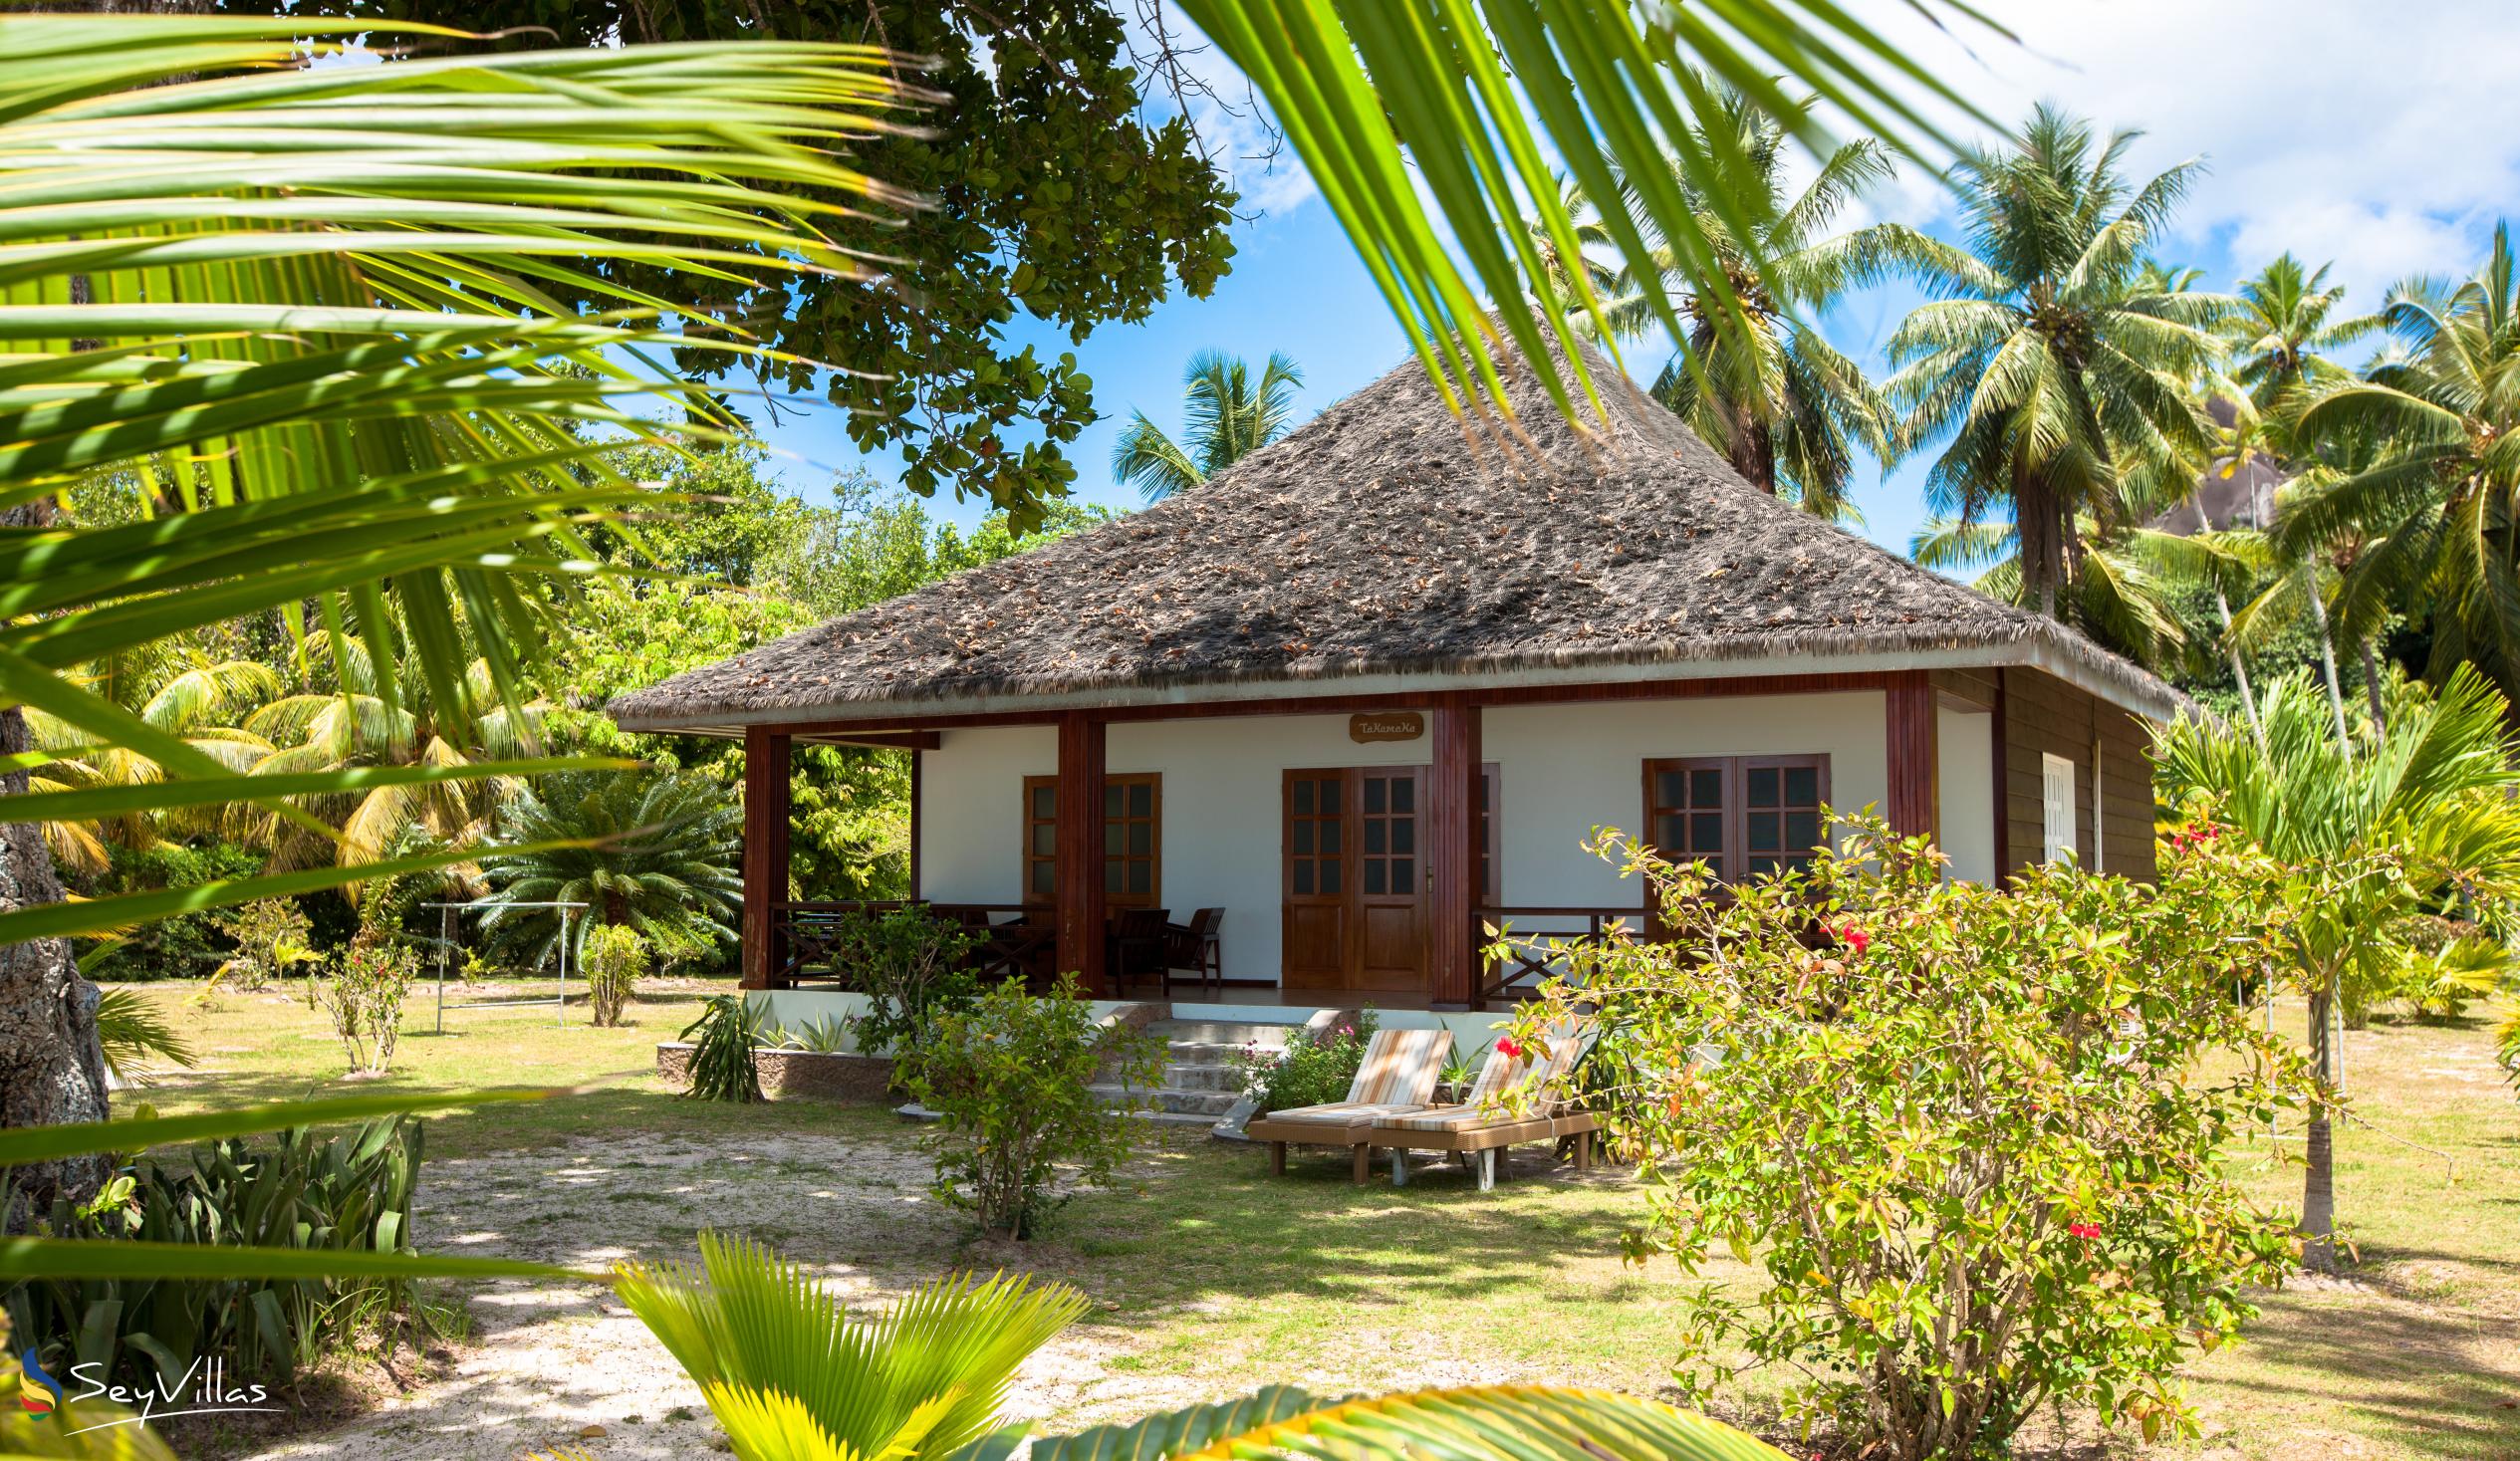 Photo 1: La Digue Island Lodge (L'Union Beach Villas) - Outdoor area - La Digue (Seychelles)